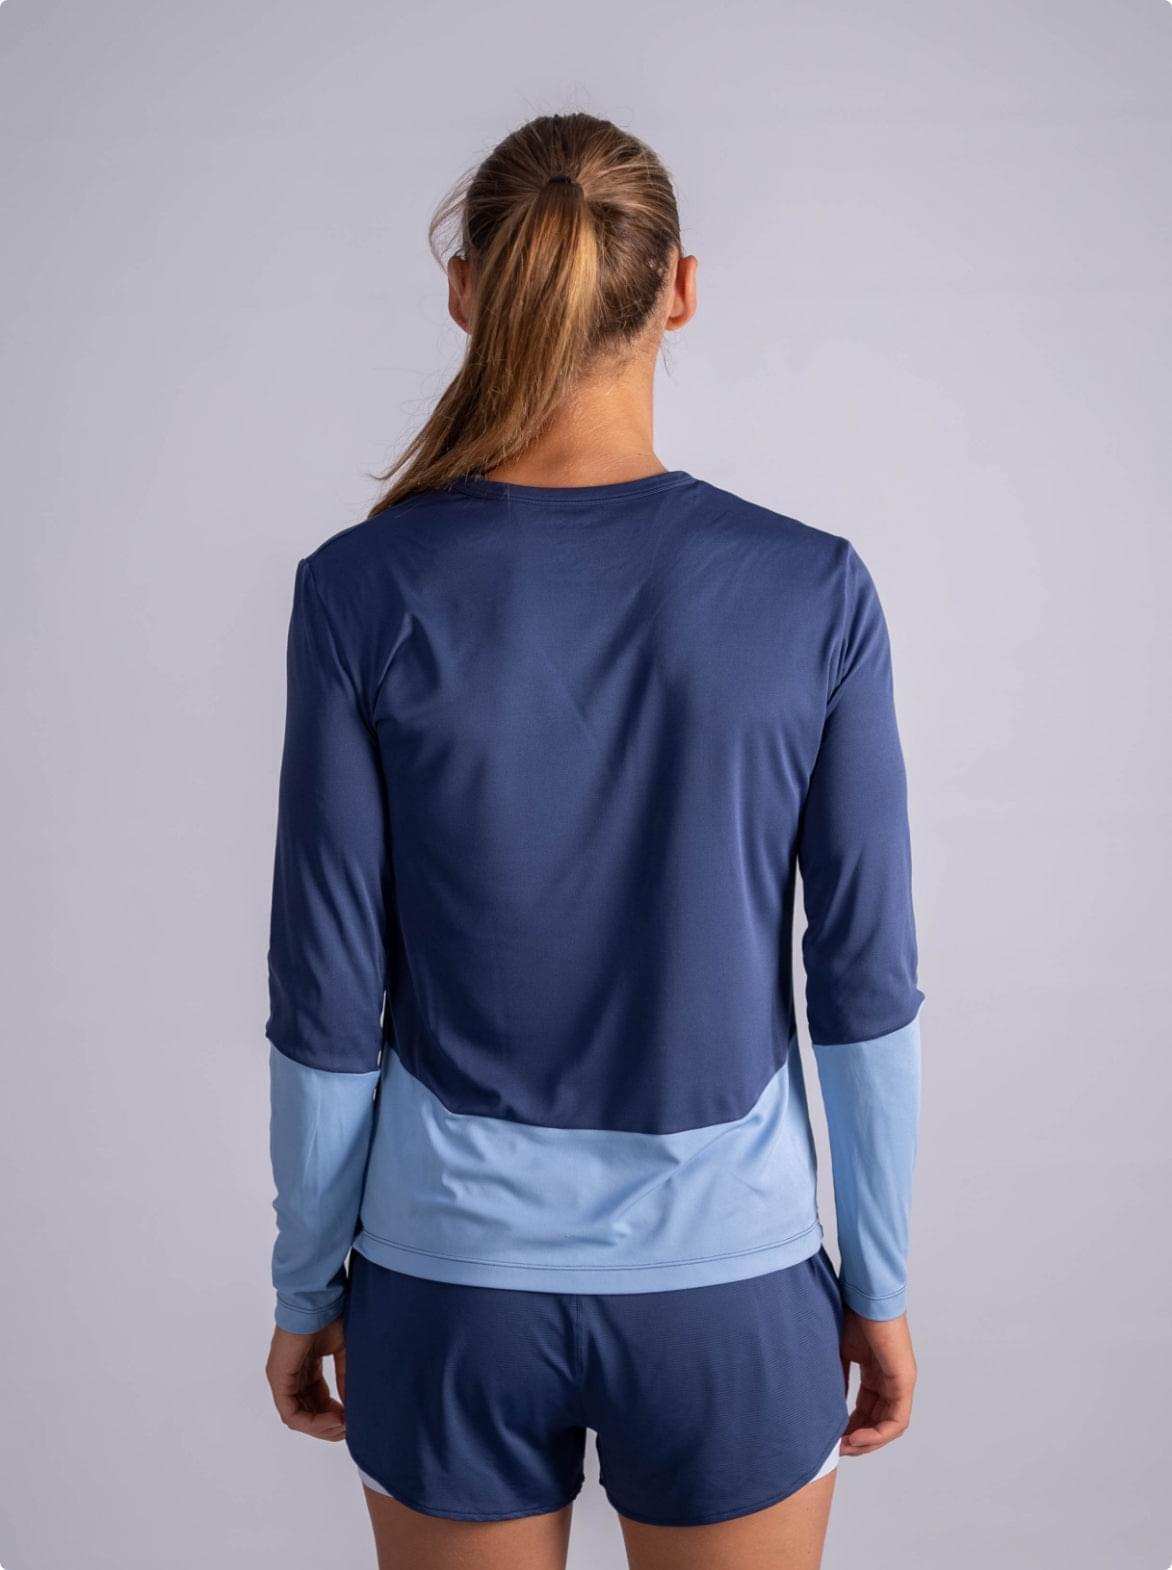 T-Shirt manches longues Running Femme Made in France et Recyclé - TOULON - Ventes privées